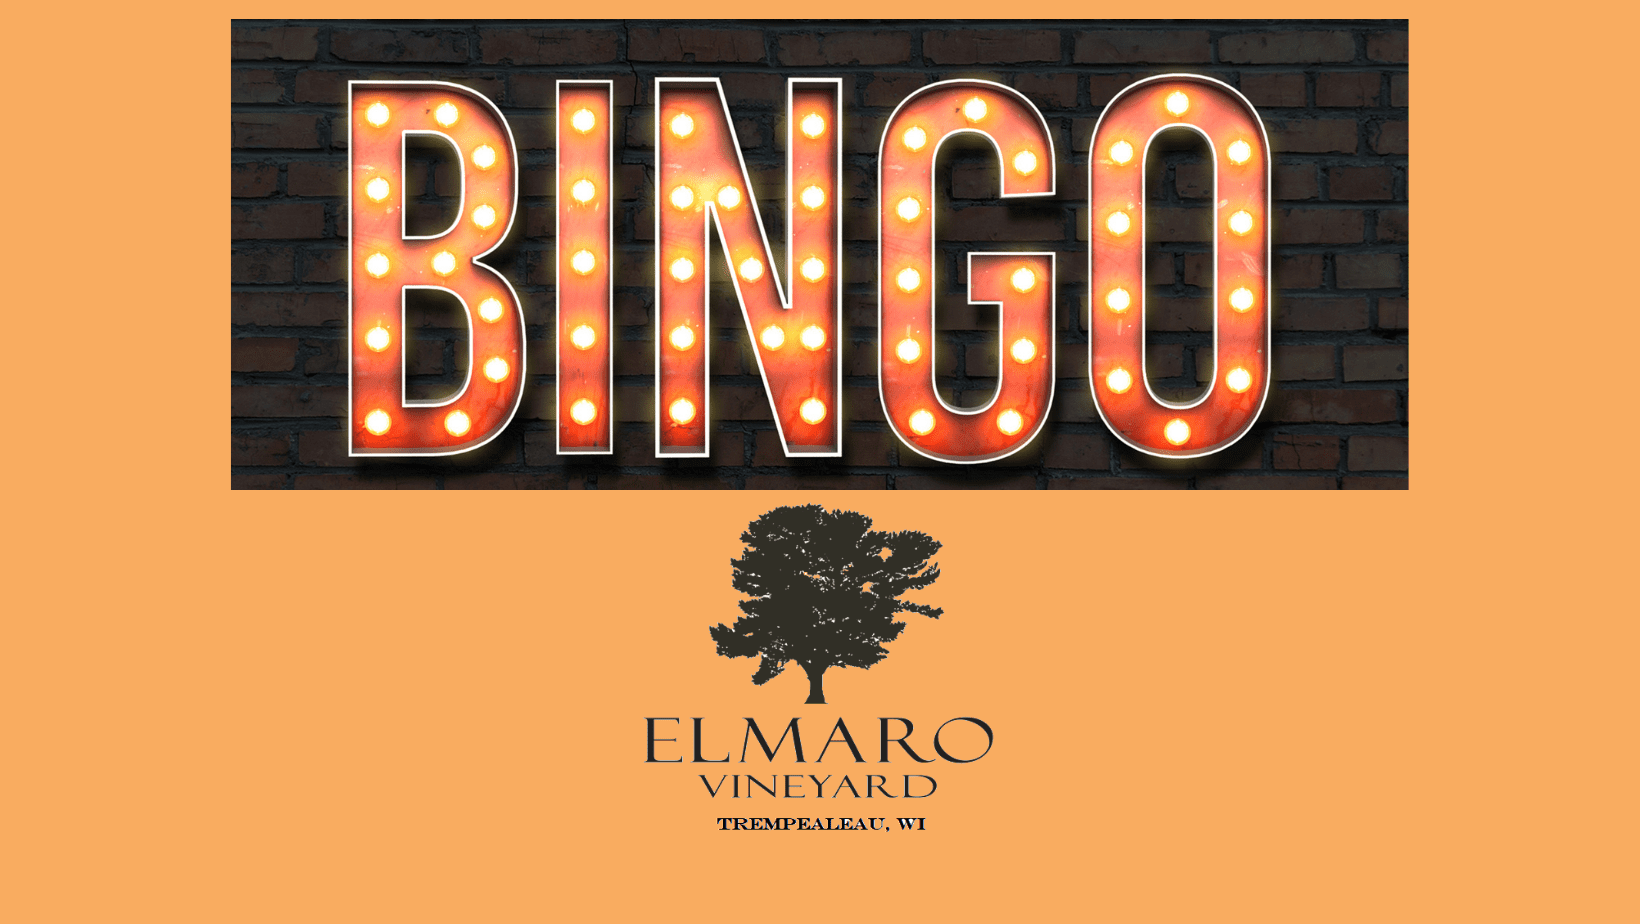 Bingo at elmaro winery.